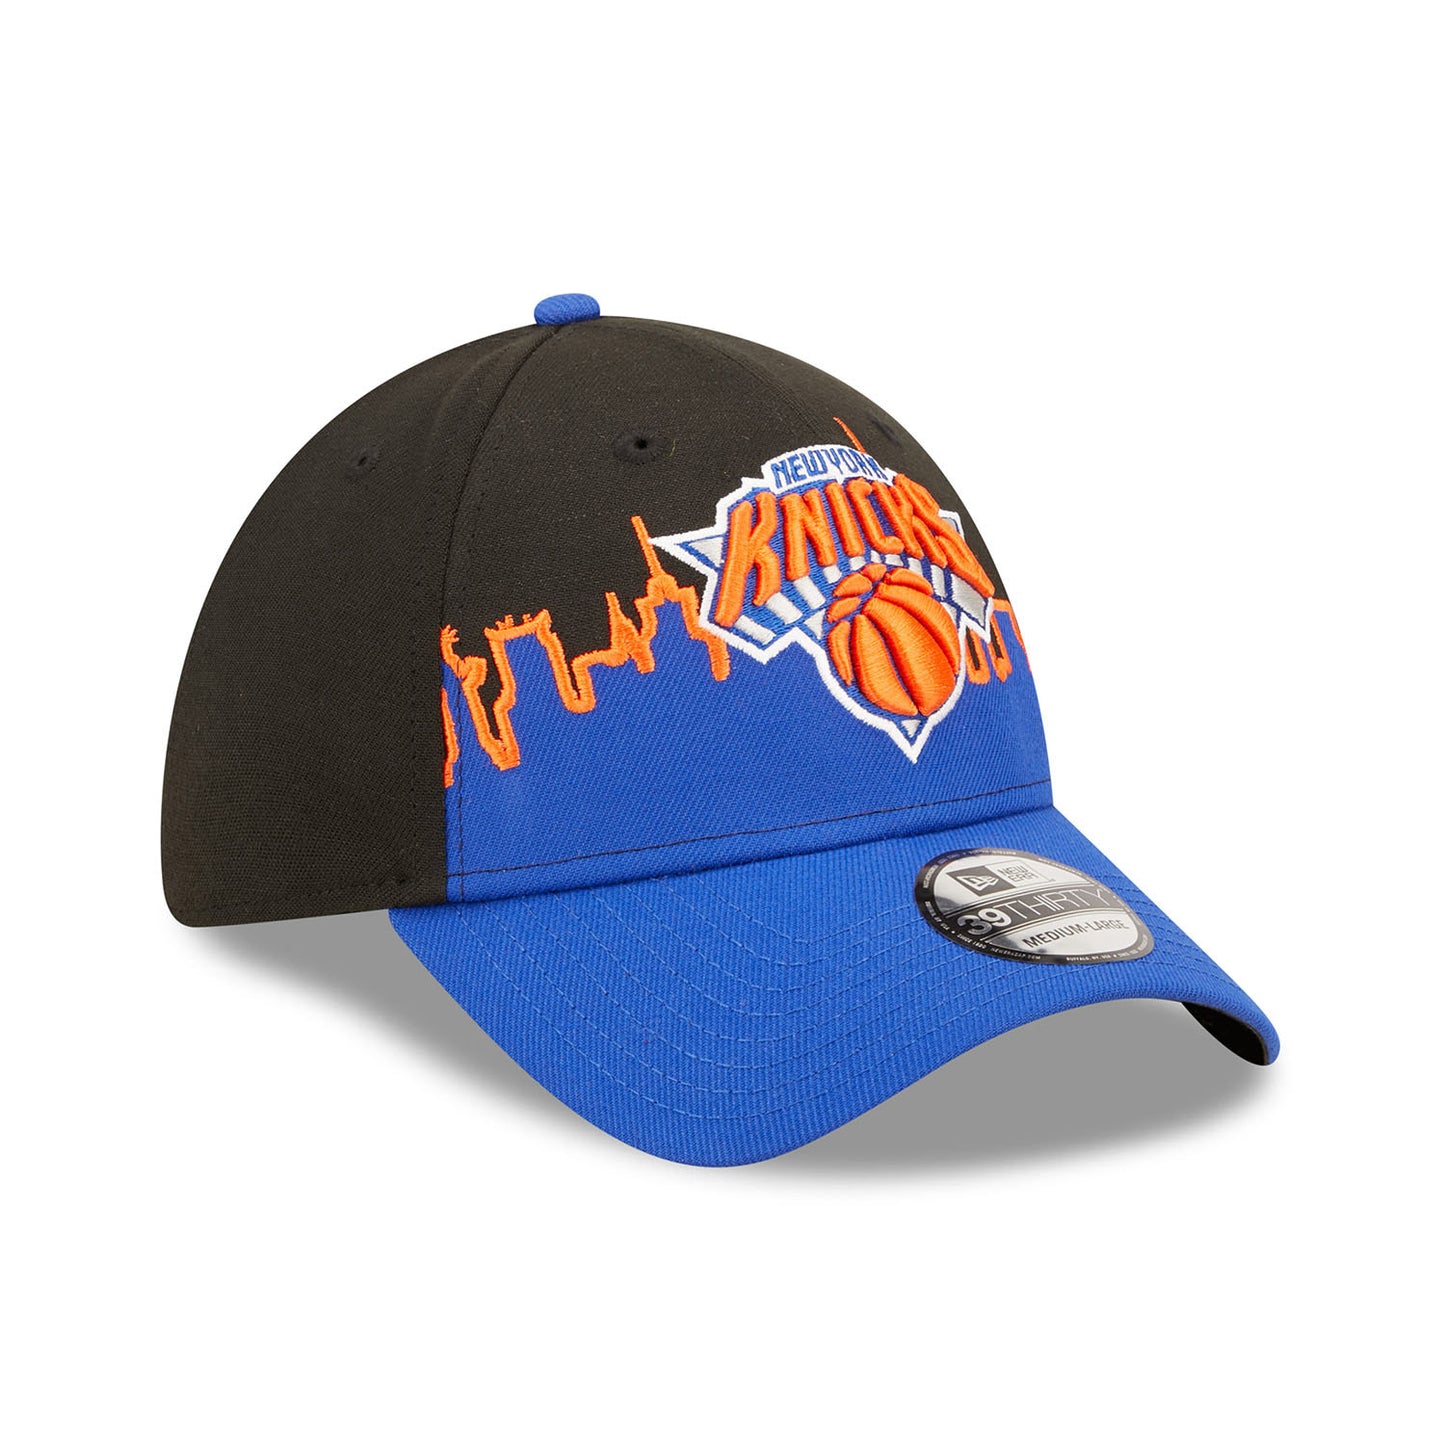 New Era Knicks Skyline Tip Off Stretchfit Hat In Black Blue & Orange - Front View